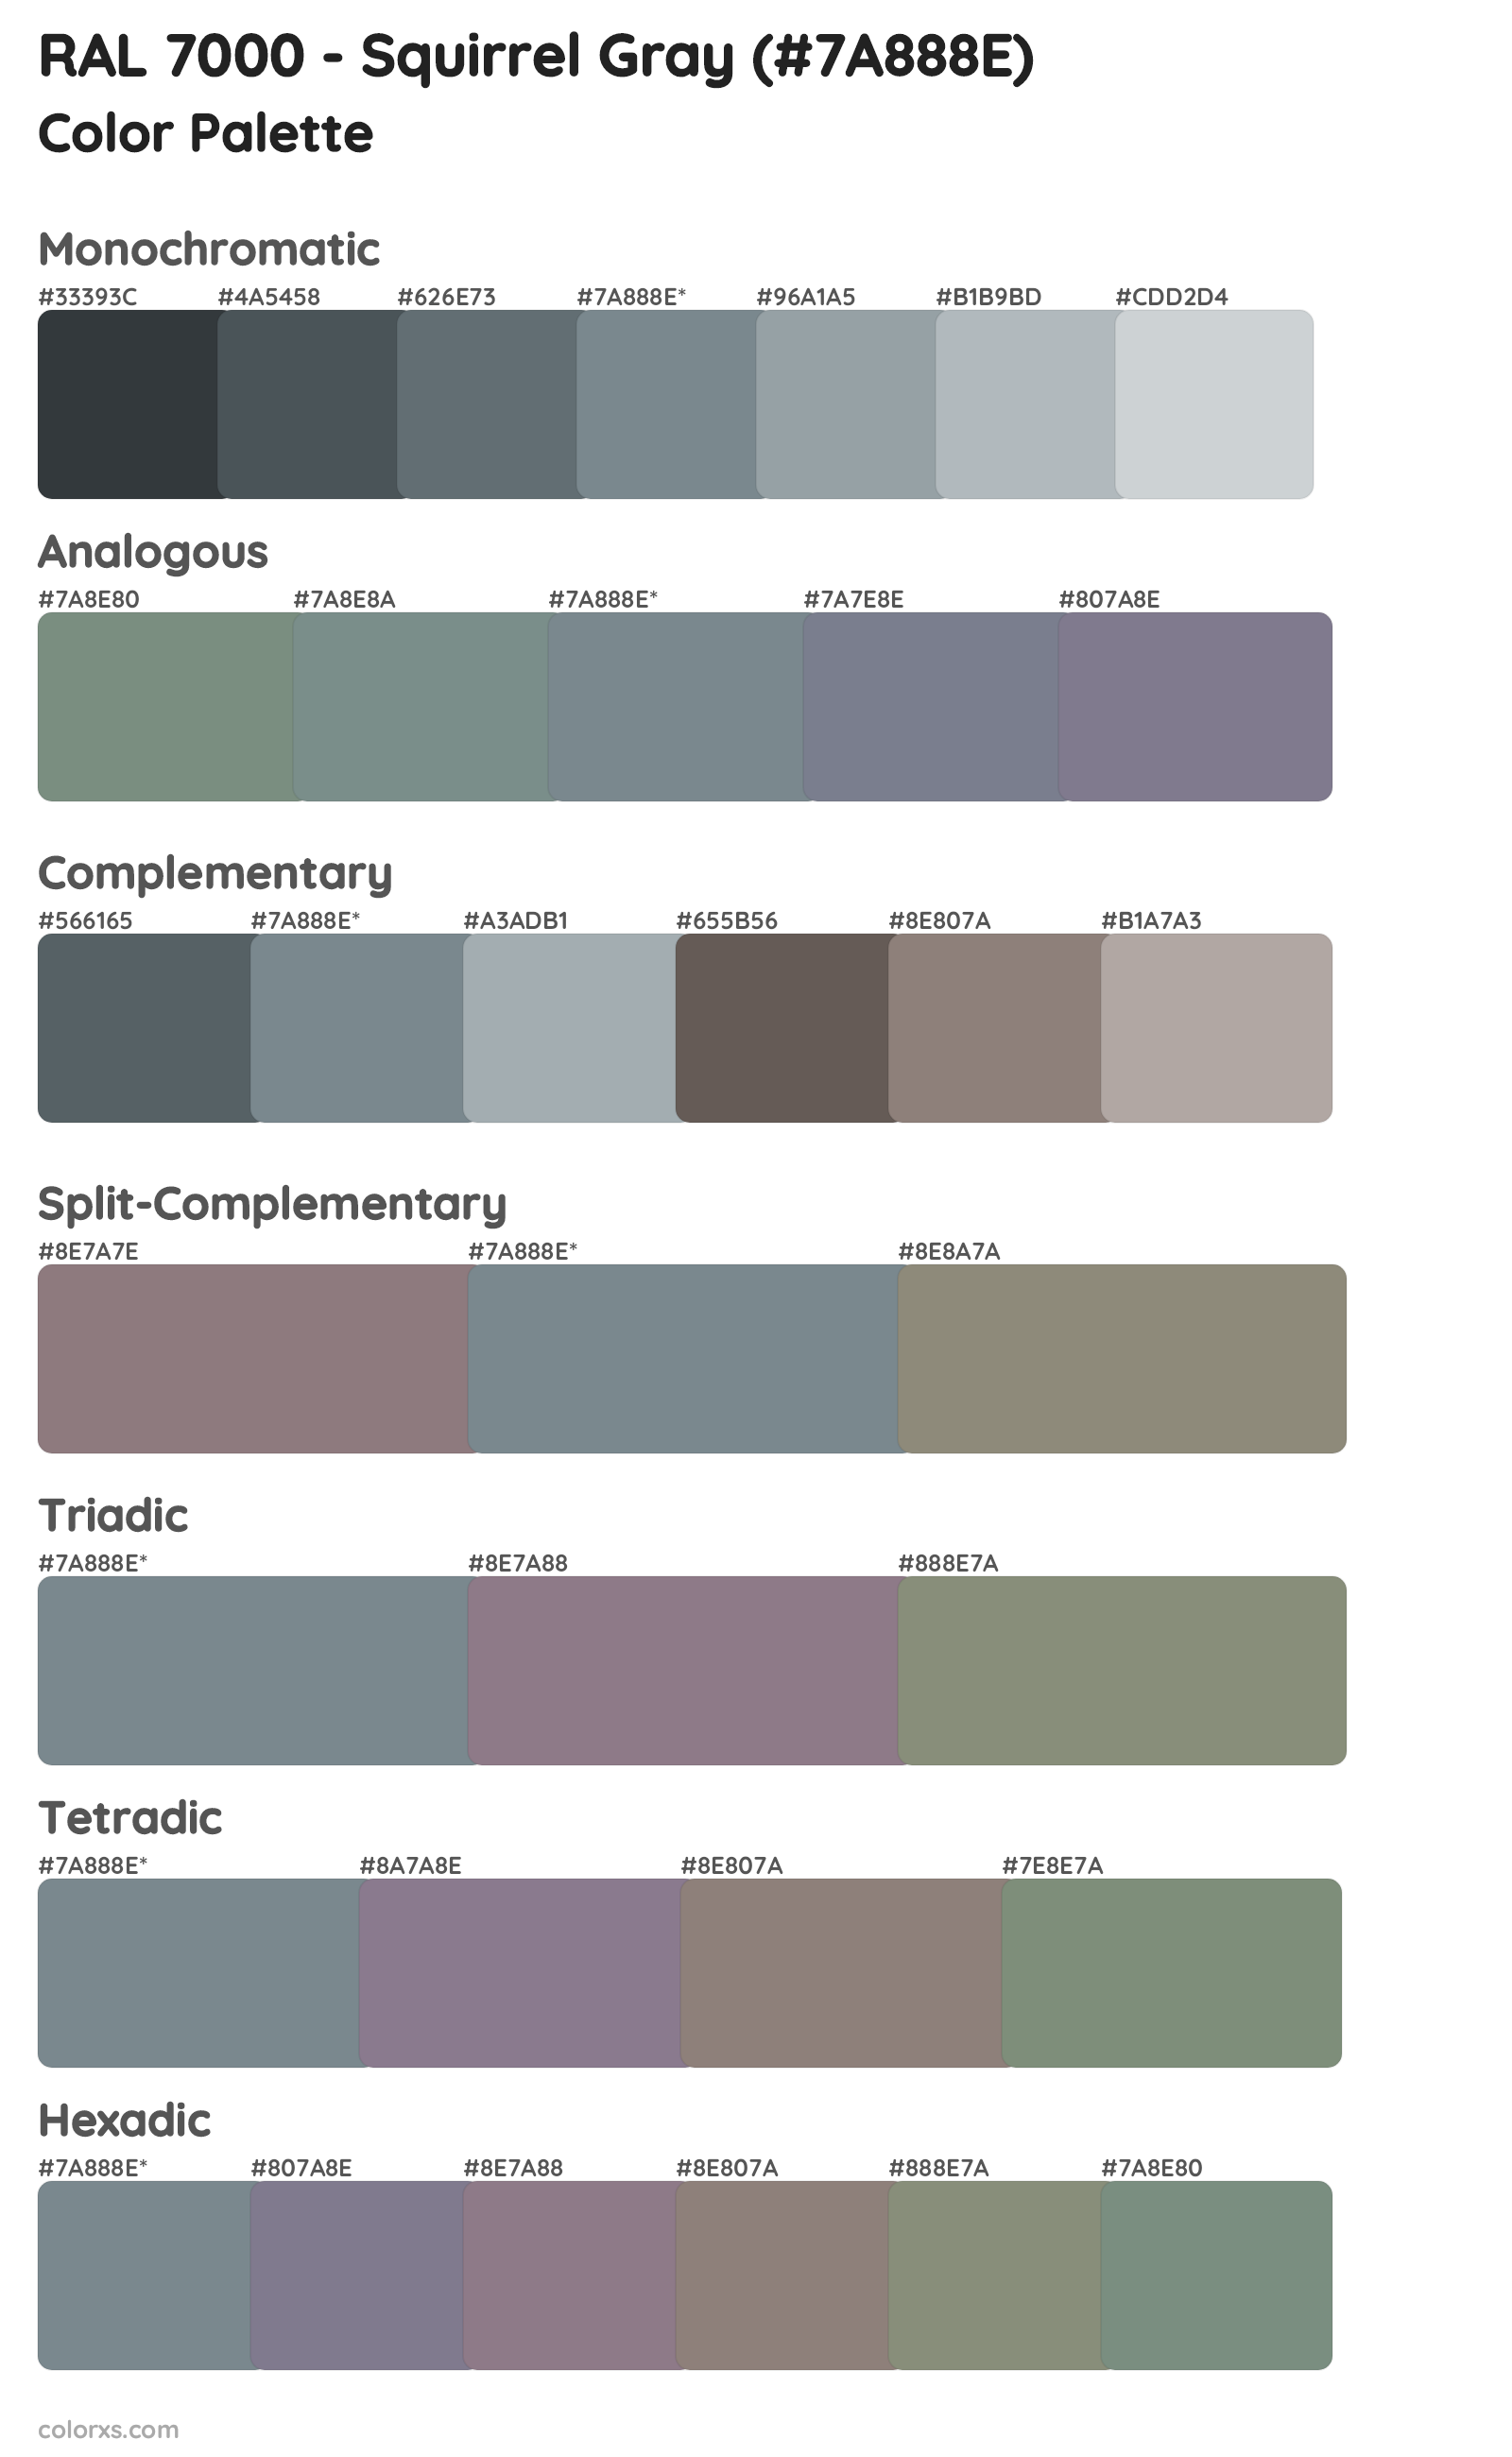 RAL 7000 - Squirrel Gray Color Scheme Palettes